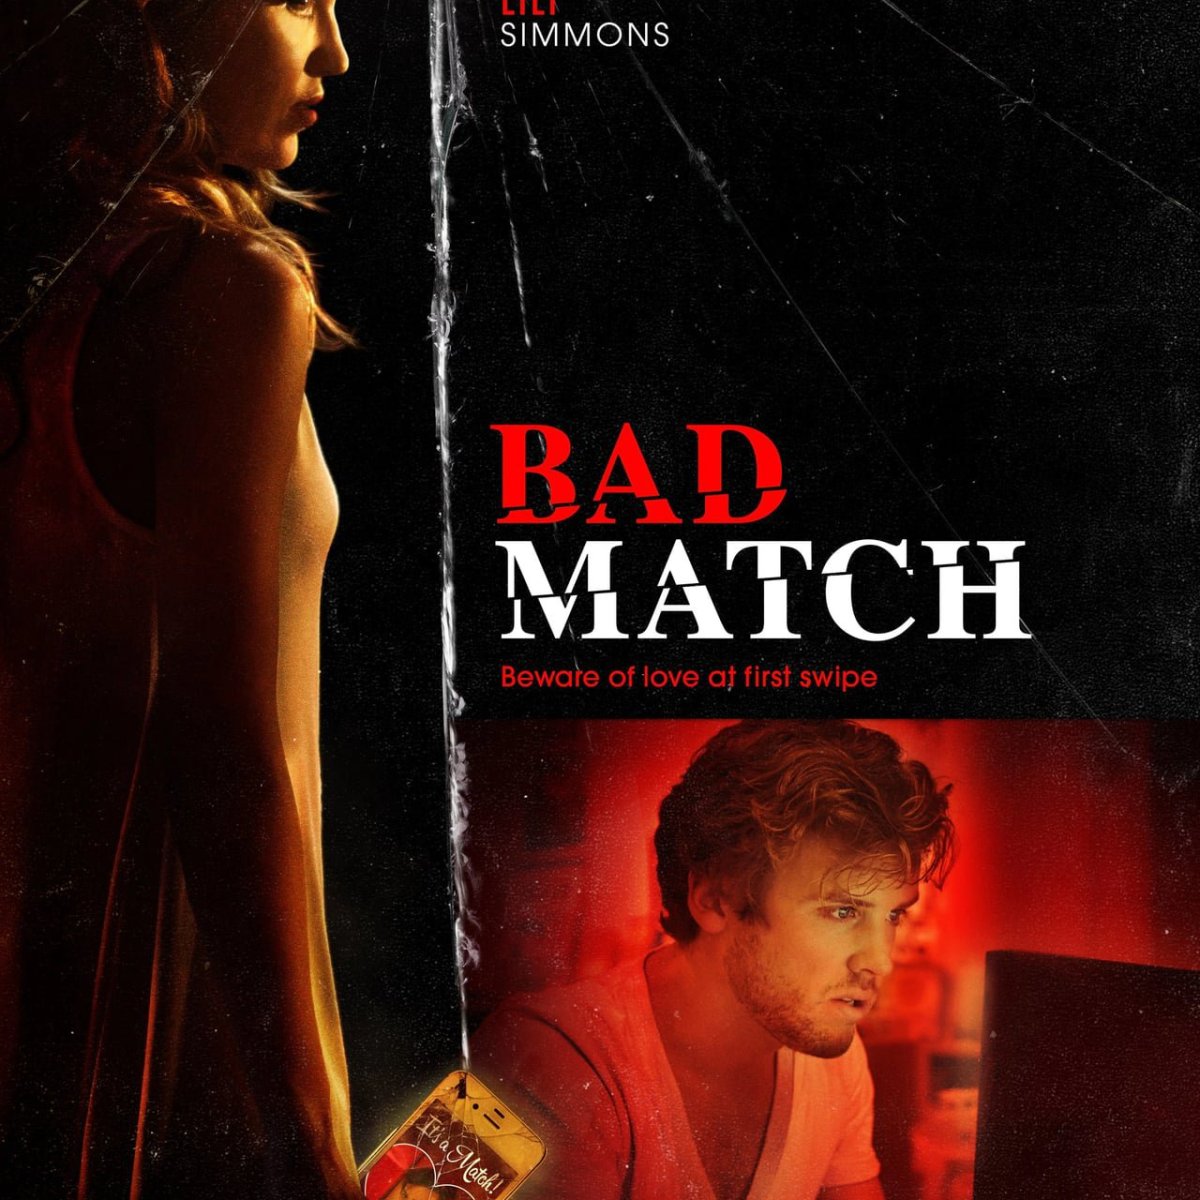 Bad match